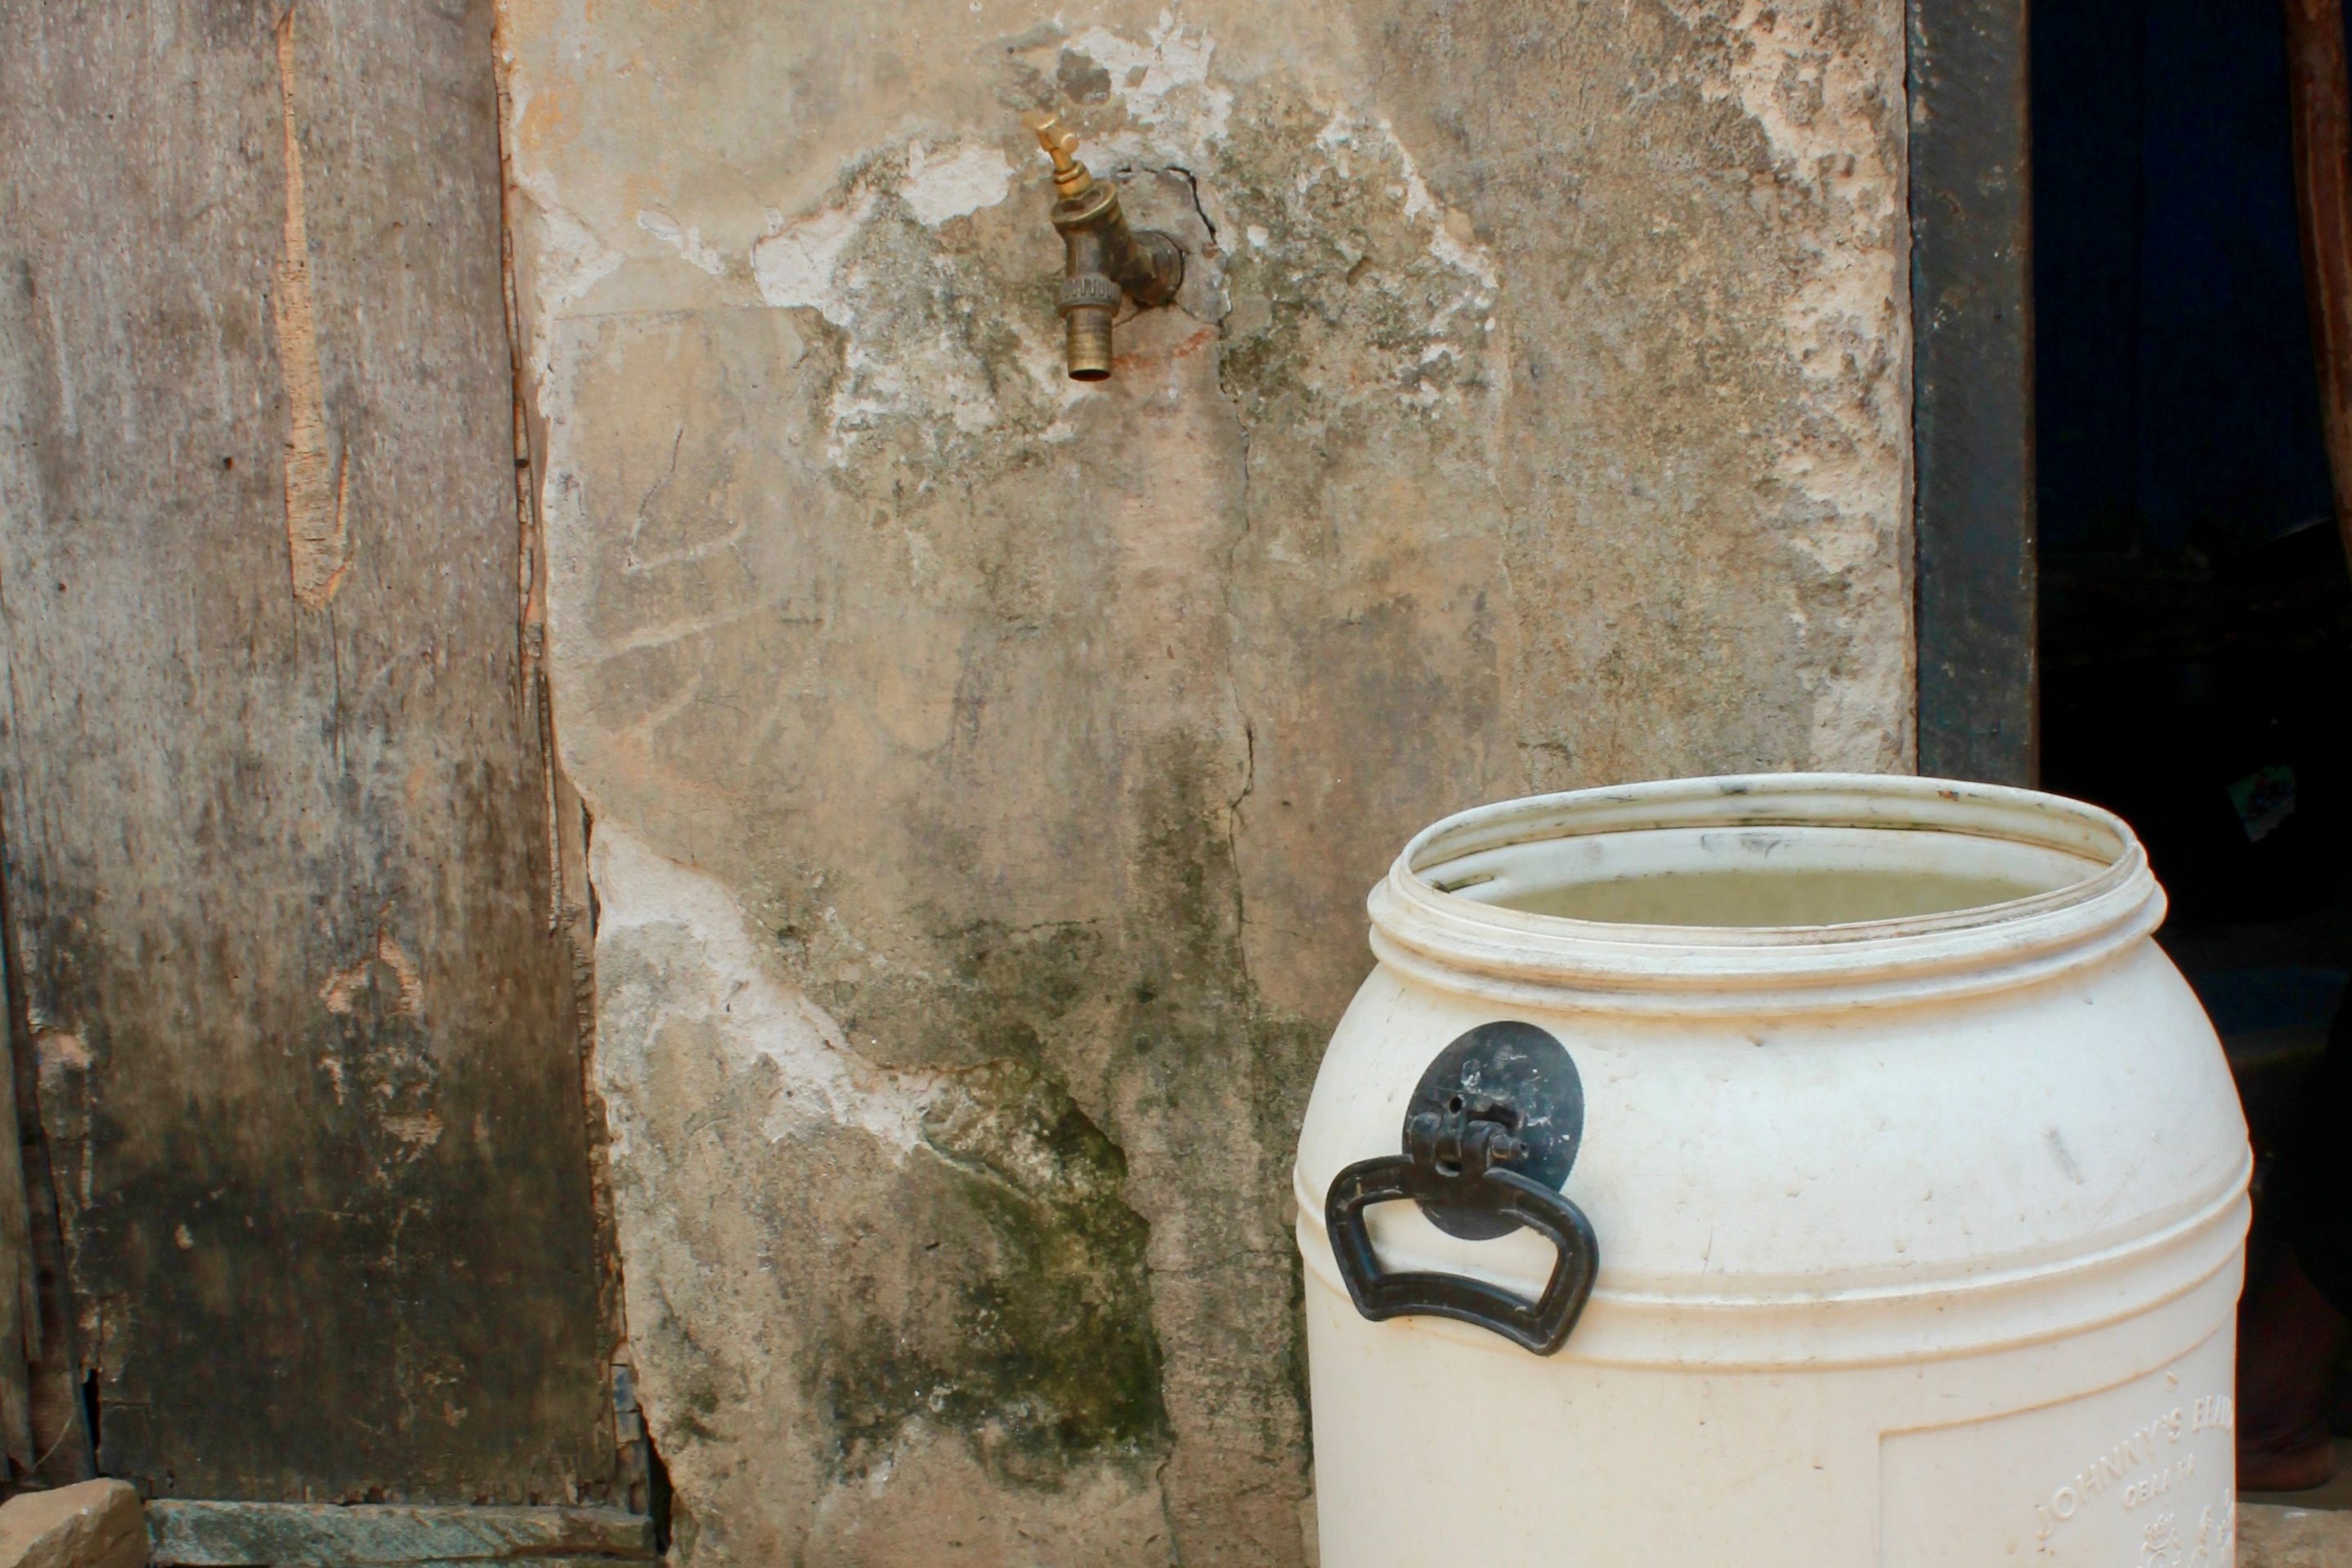 Water is a key ingredient for a fufu seller in a village in Shama District, Western Region, Ghana.